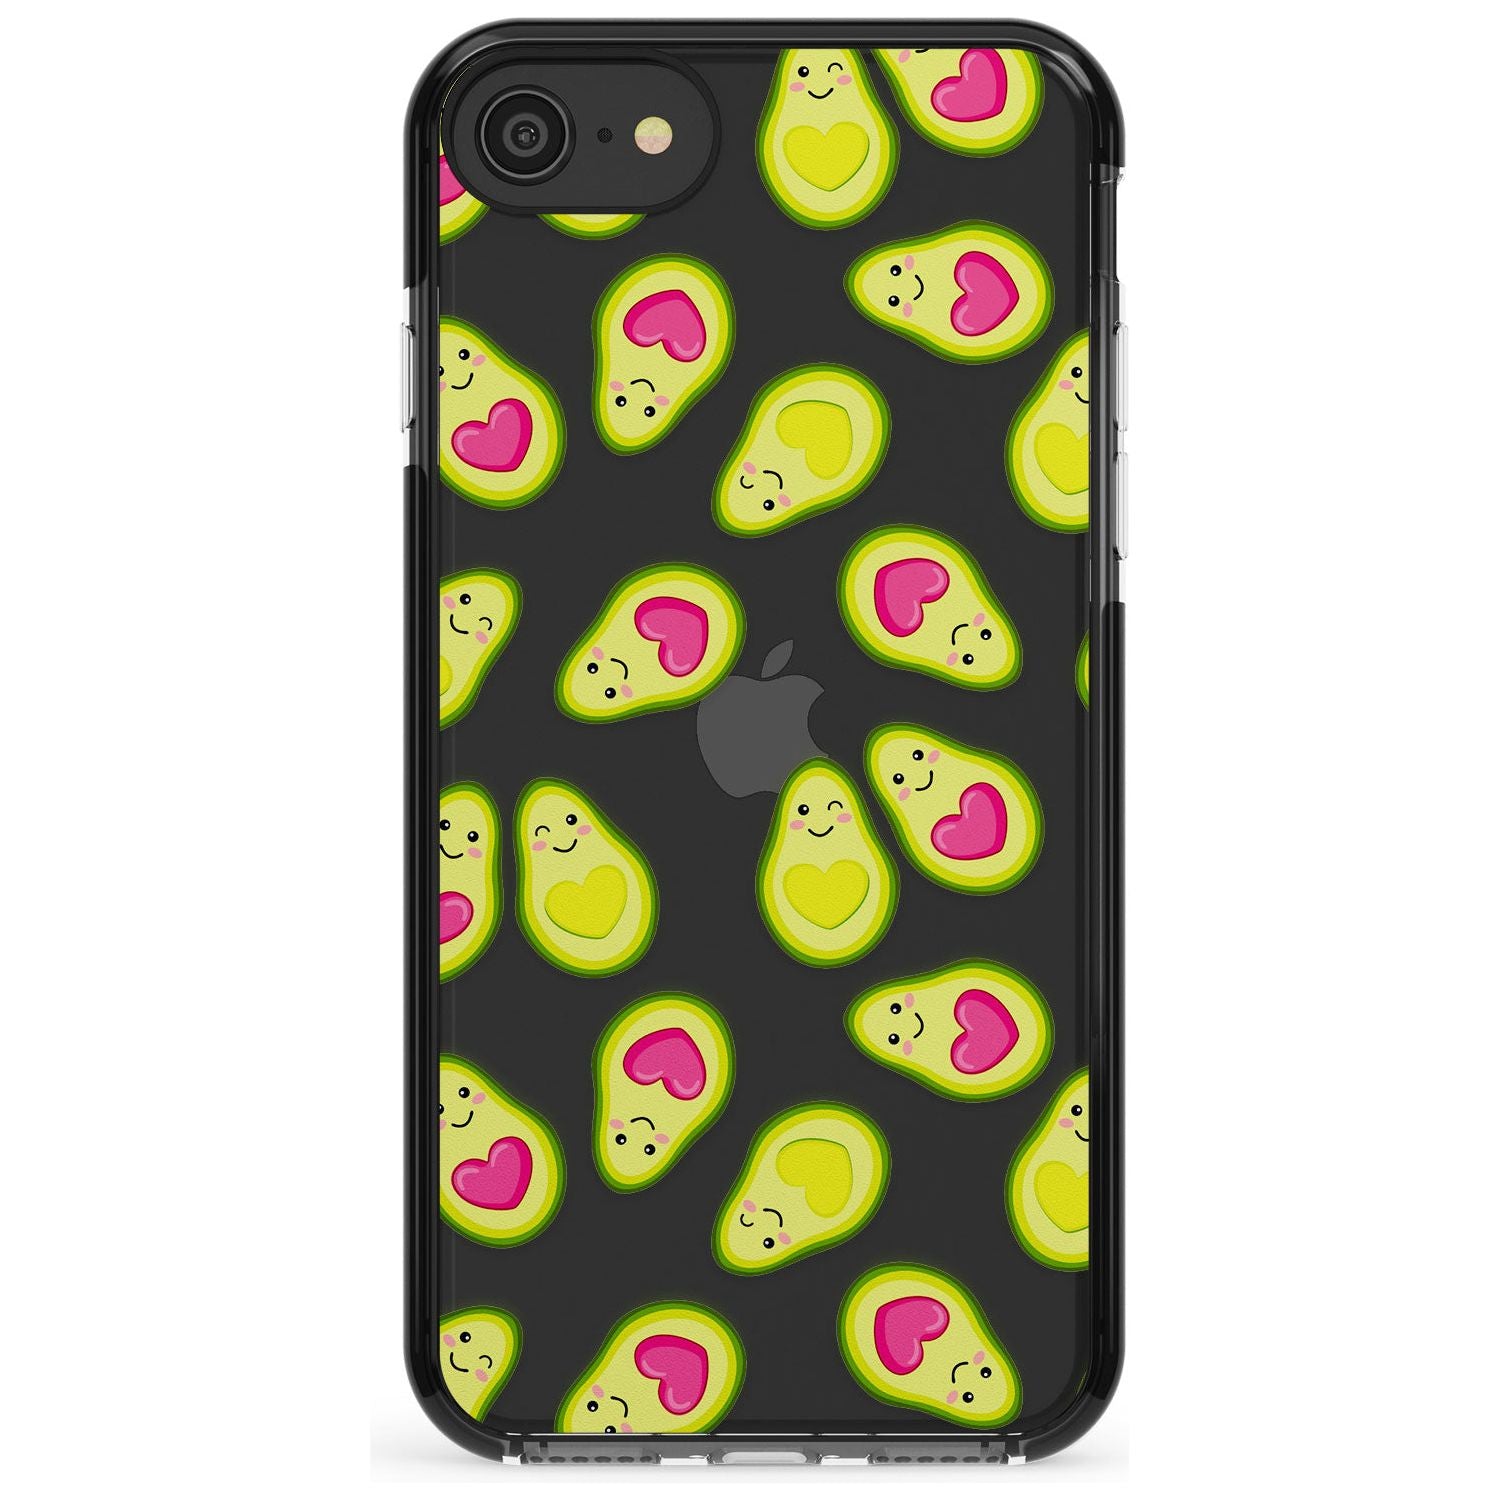 Avocado Love Black Impact Phone Case for iPhone SE 8 7 Plus